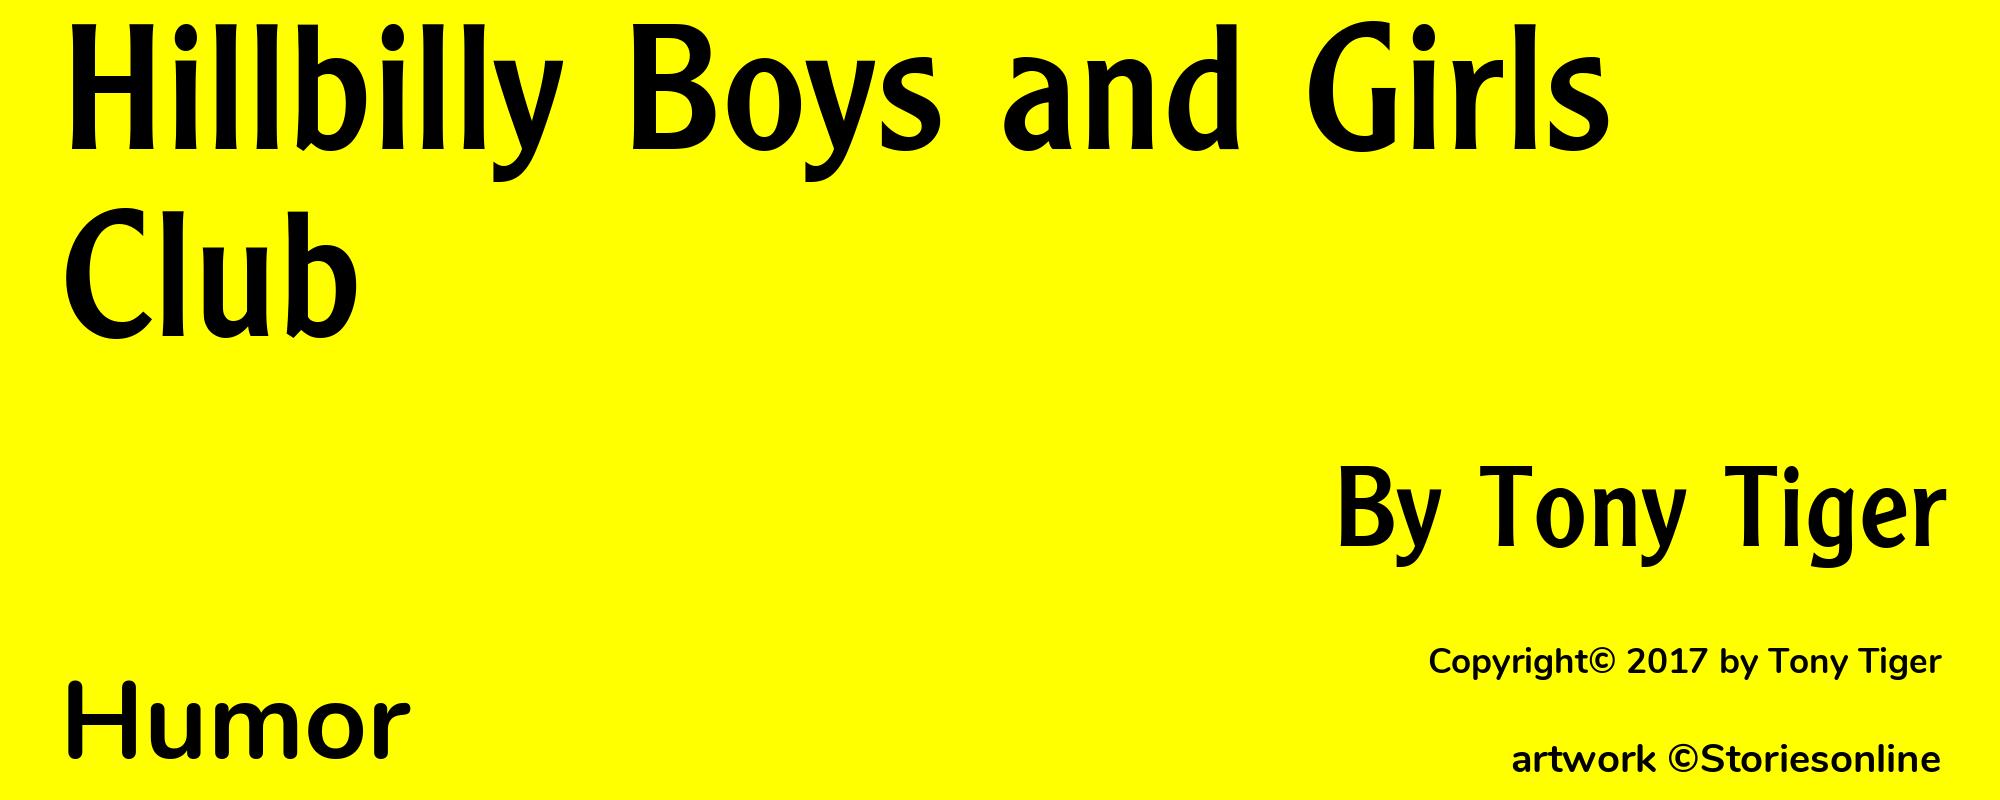 Hillbilly Boys and Girls Club - Cover